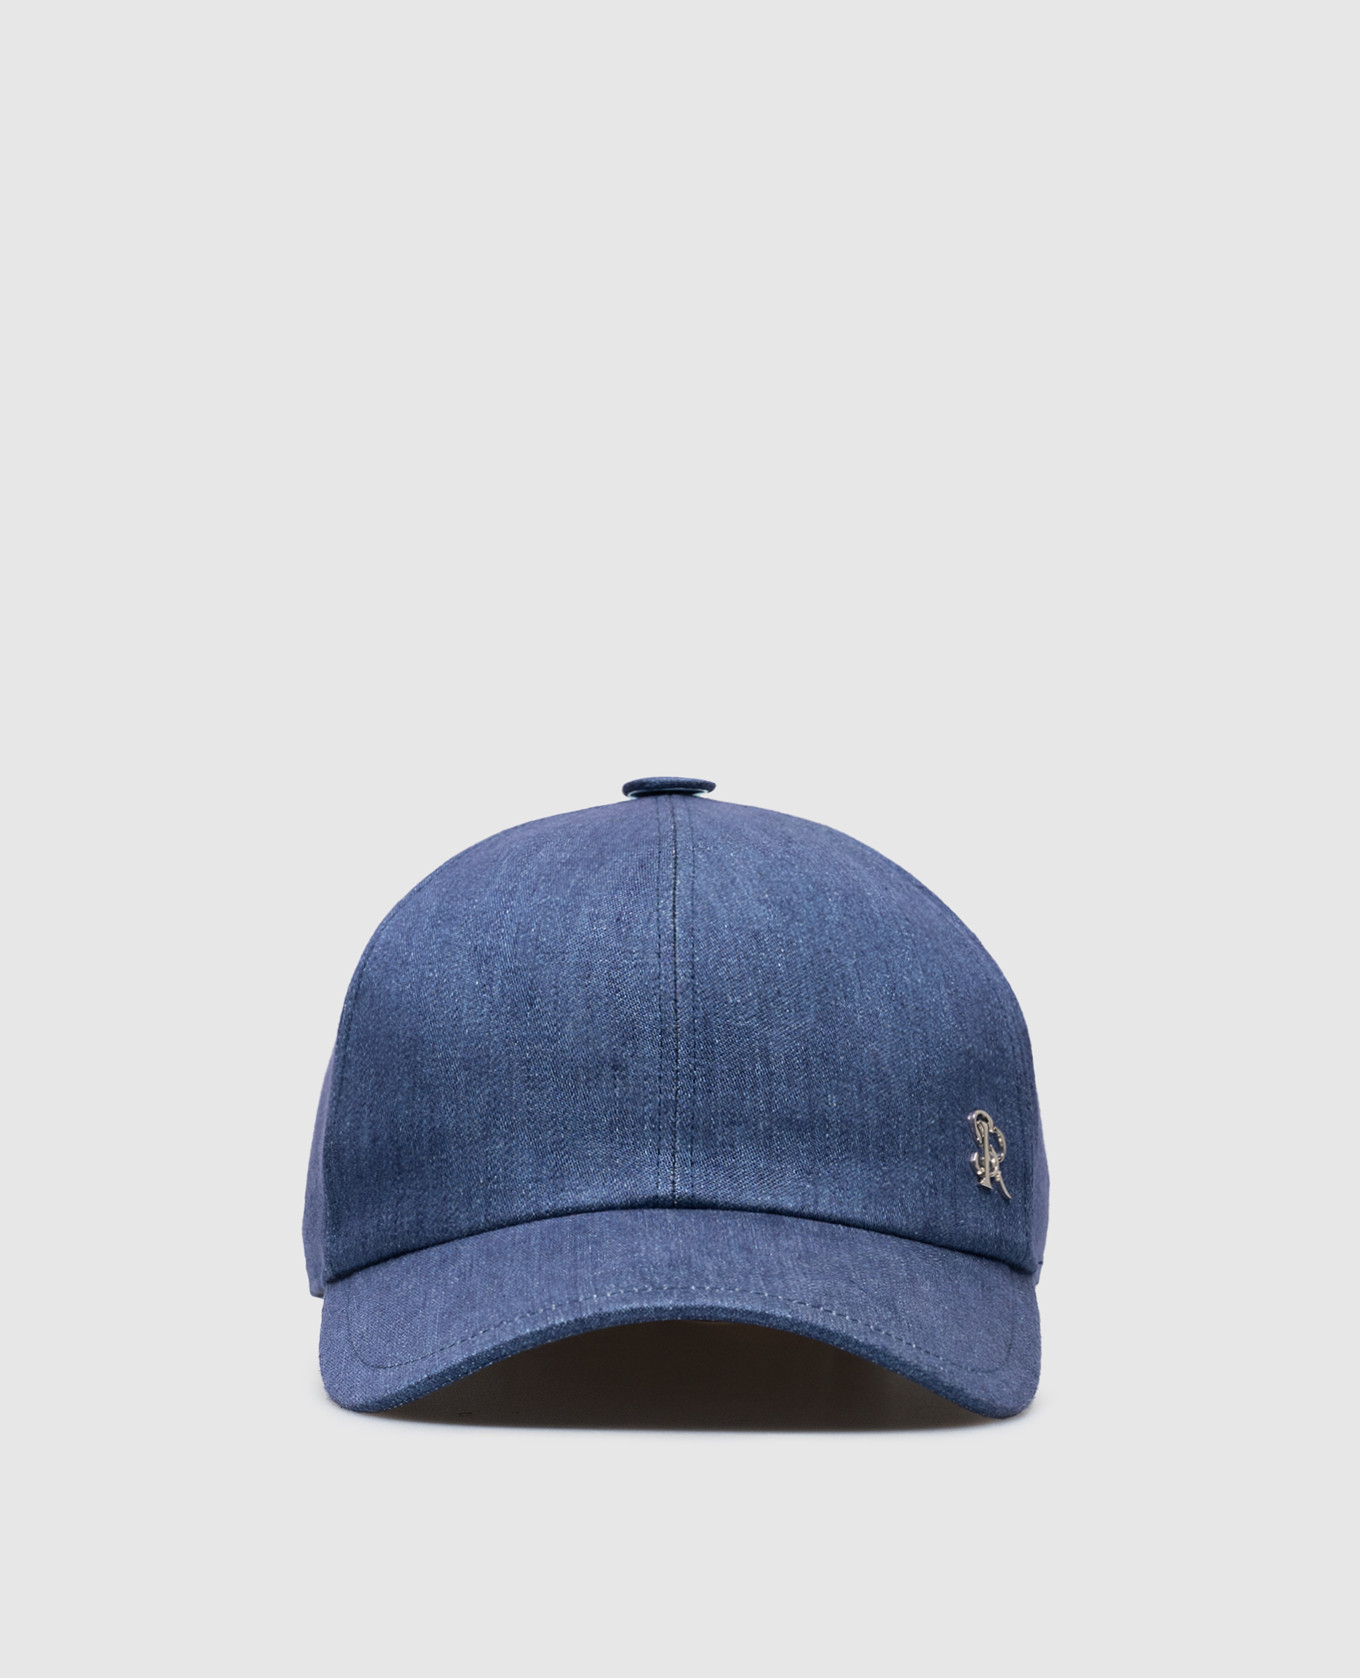 Blue linen cap with metallic logo